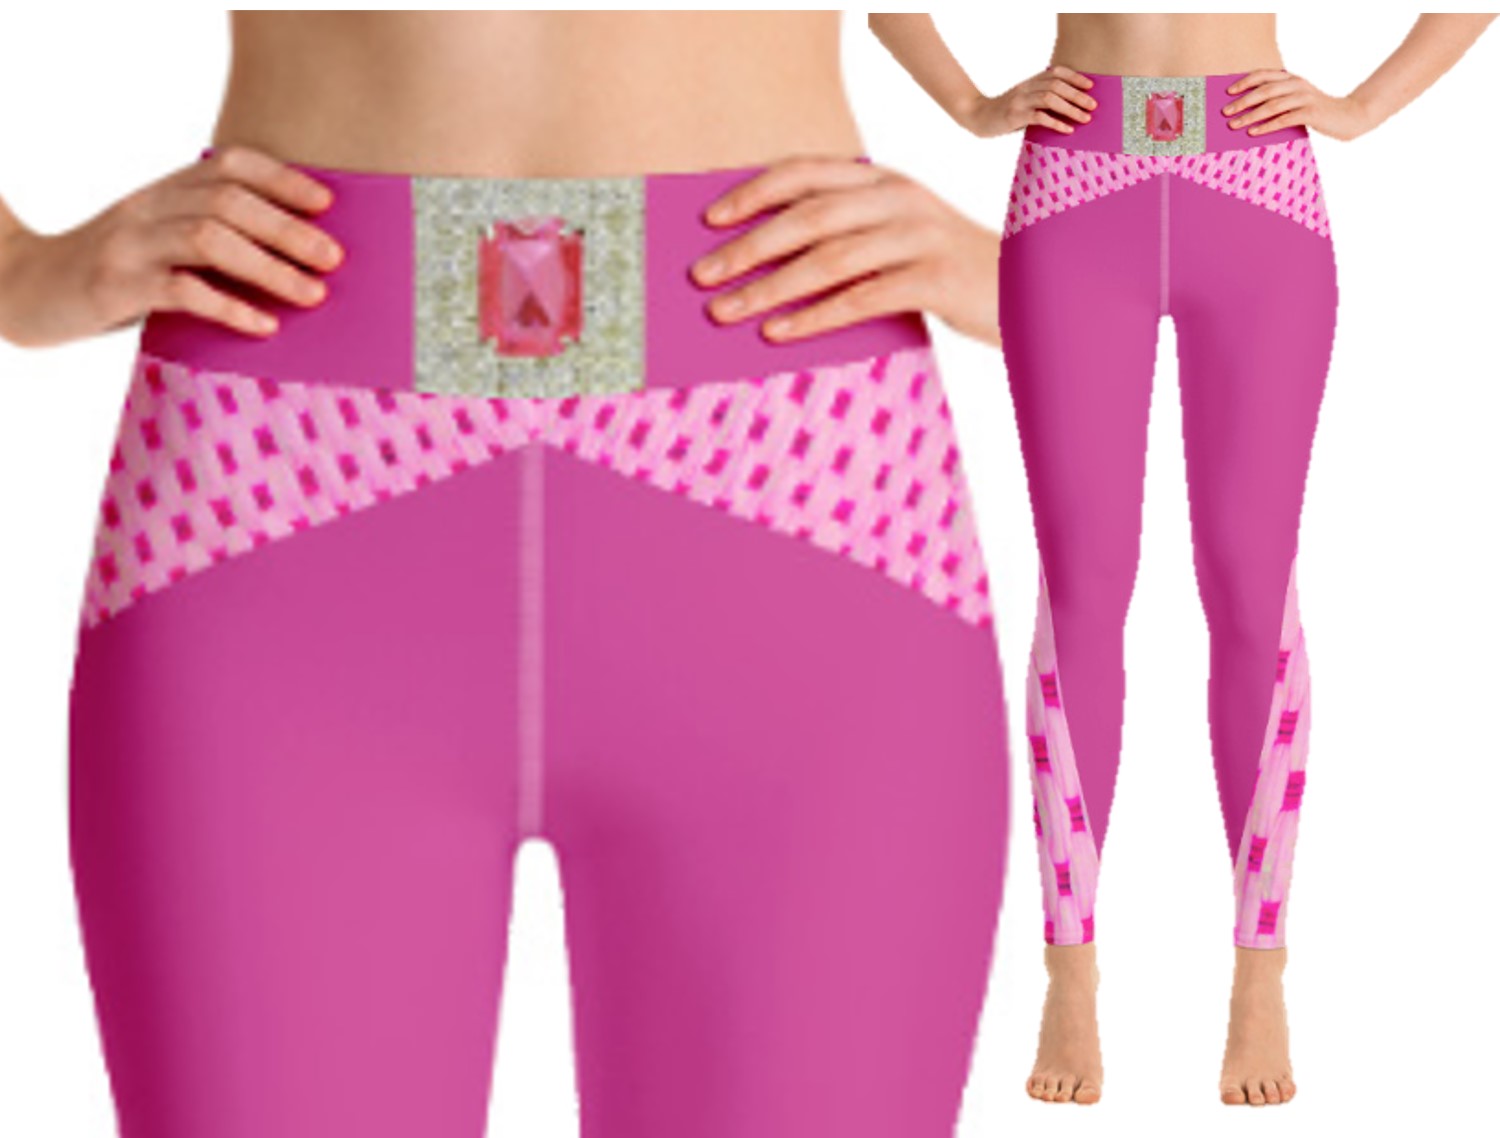 High-waist yoga pants with pocket. Women's gym workout leggings